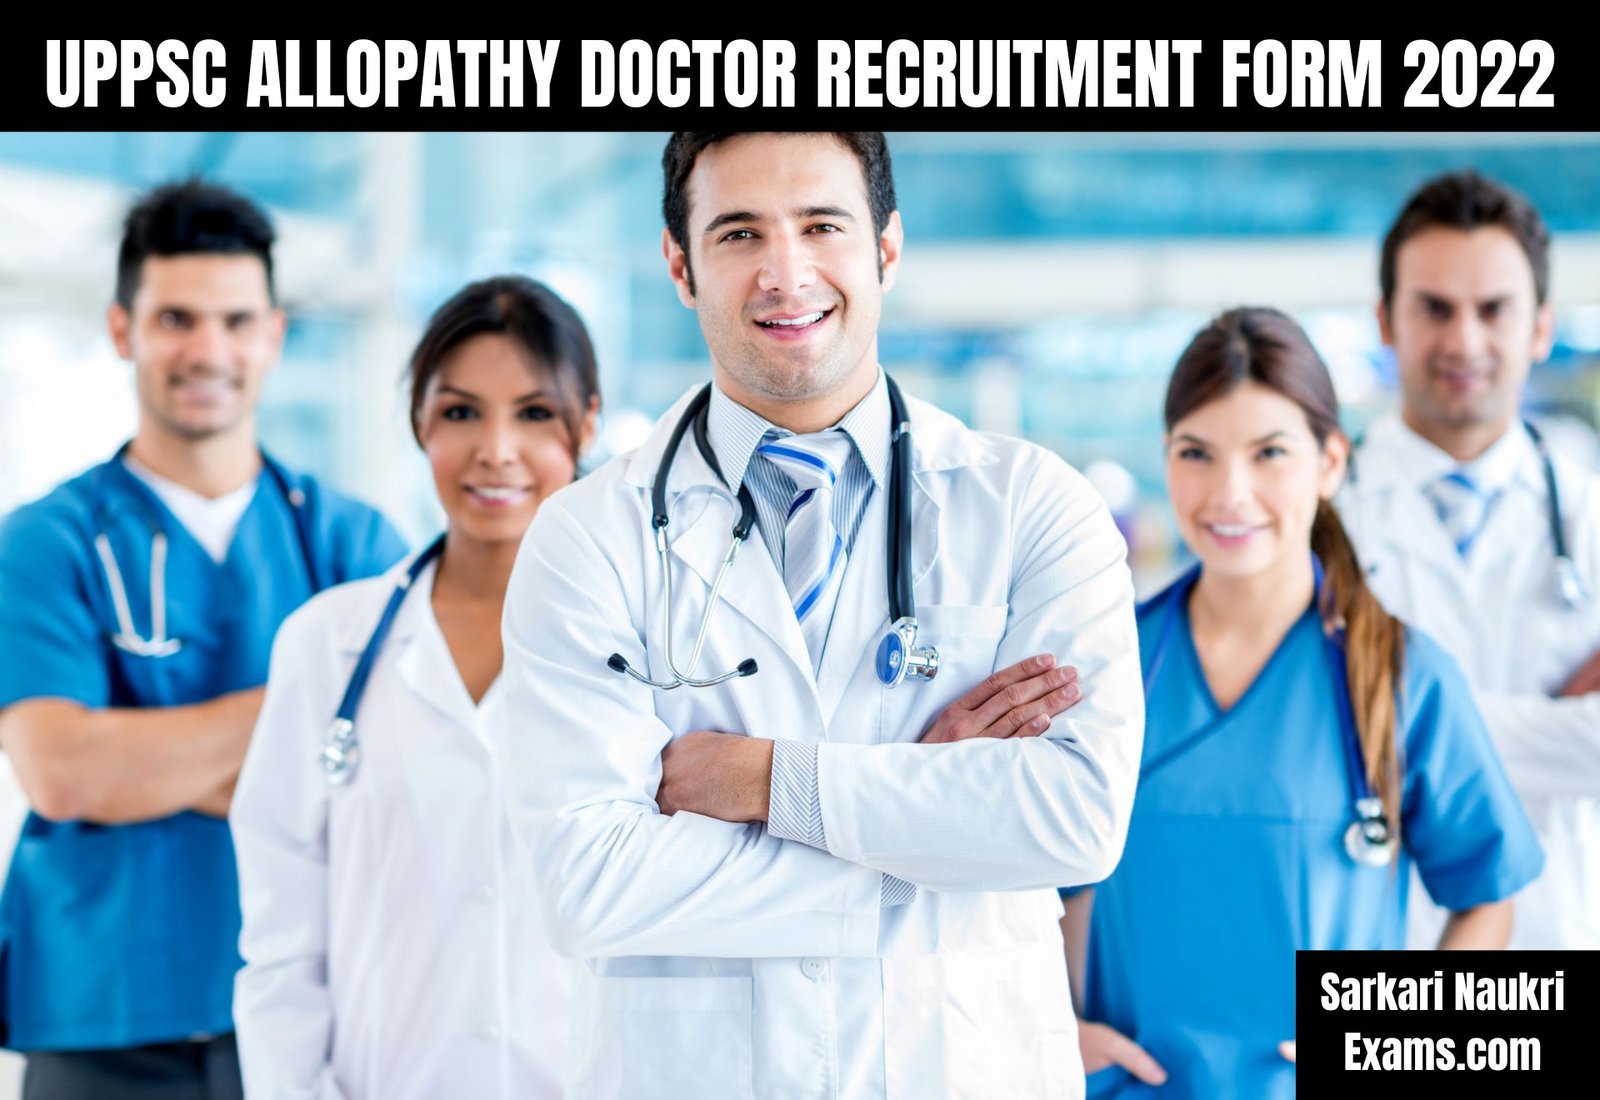 UPPSC Allopathy Doctor Recruitment Form 2022